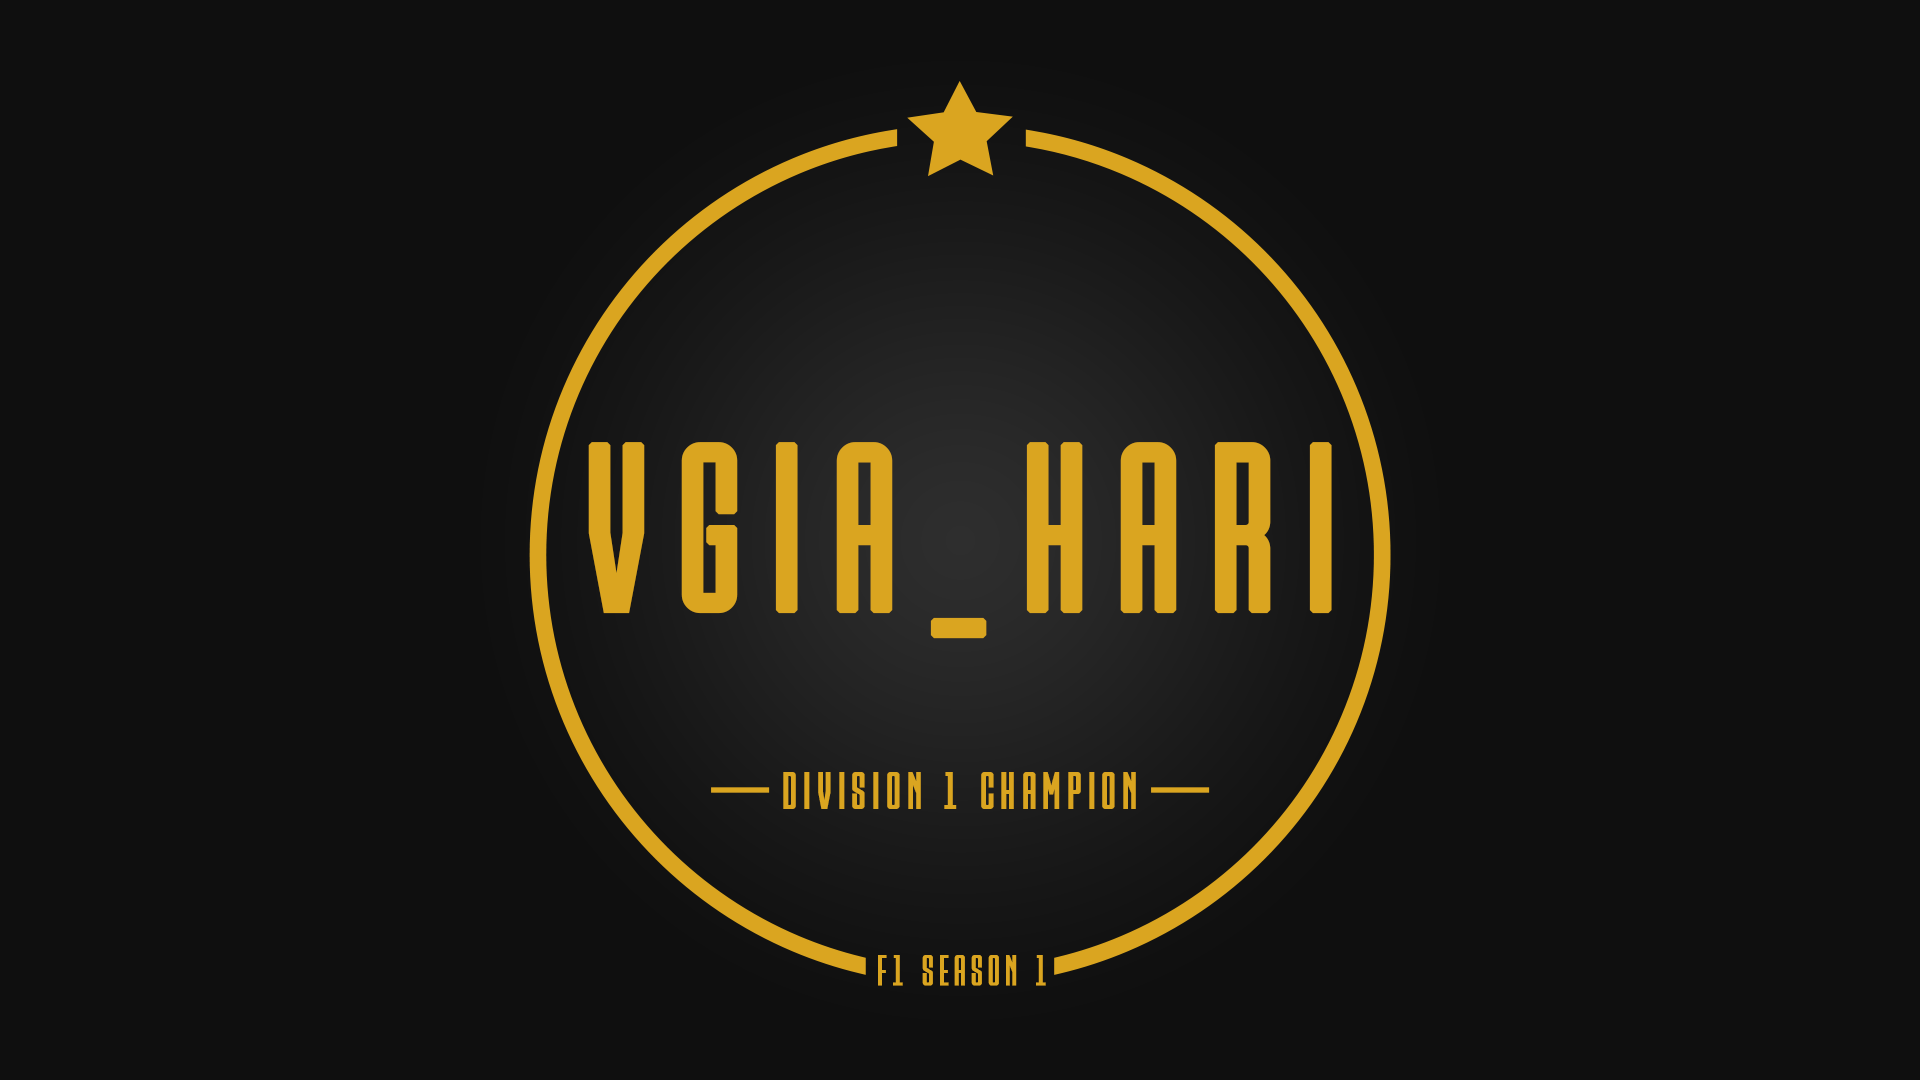 Division 1 Champion - VGIA_Hari